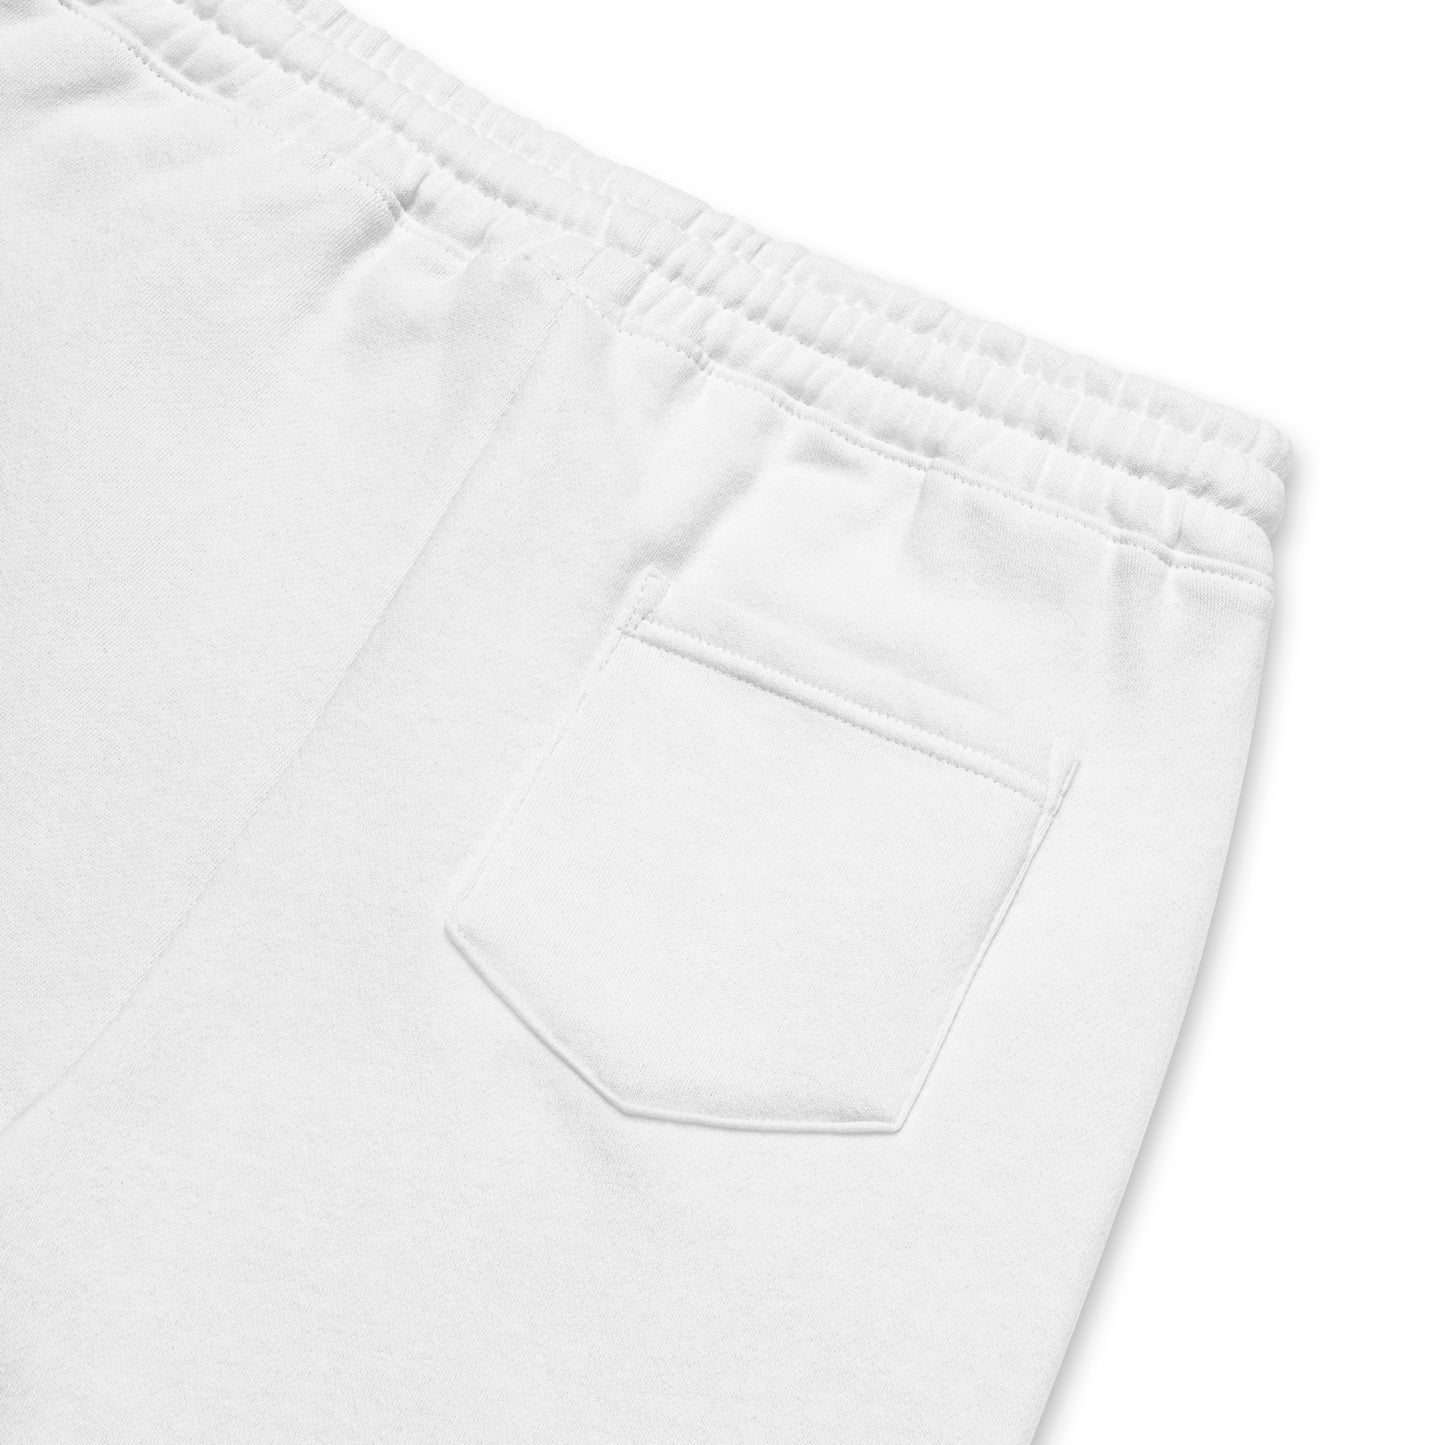 (New) #Nexxtpush Palm Paradise Men's fleece shorts